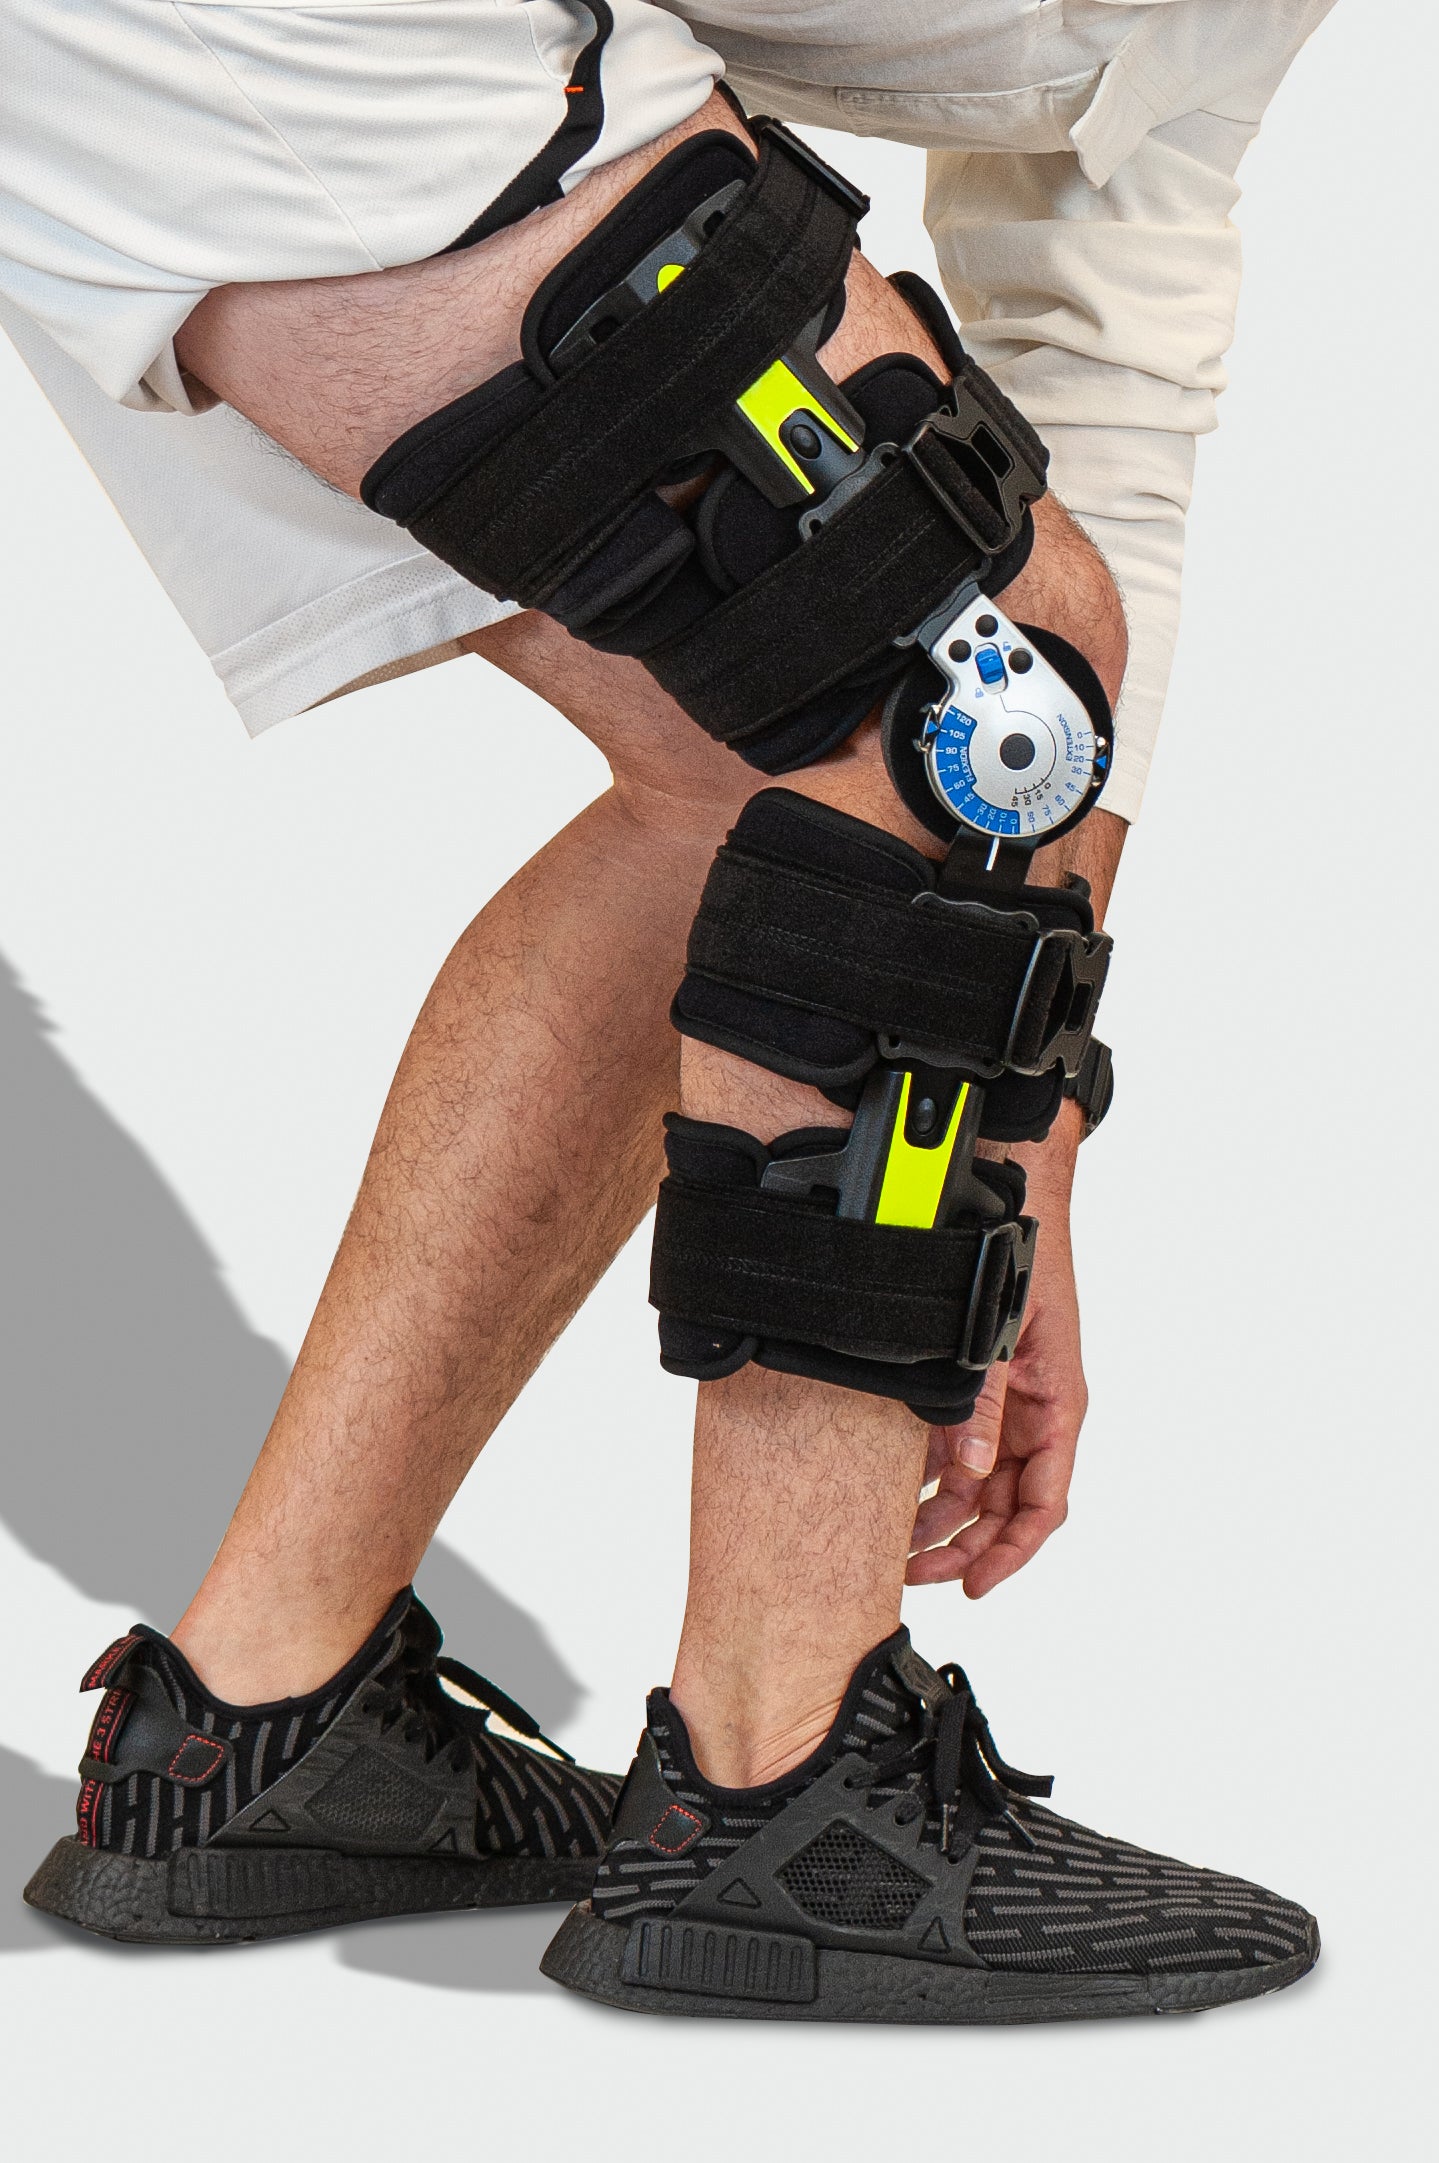 Buy Now - Body Care Velcro Knee Brace with Adjustable Straps